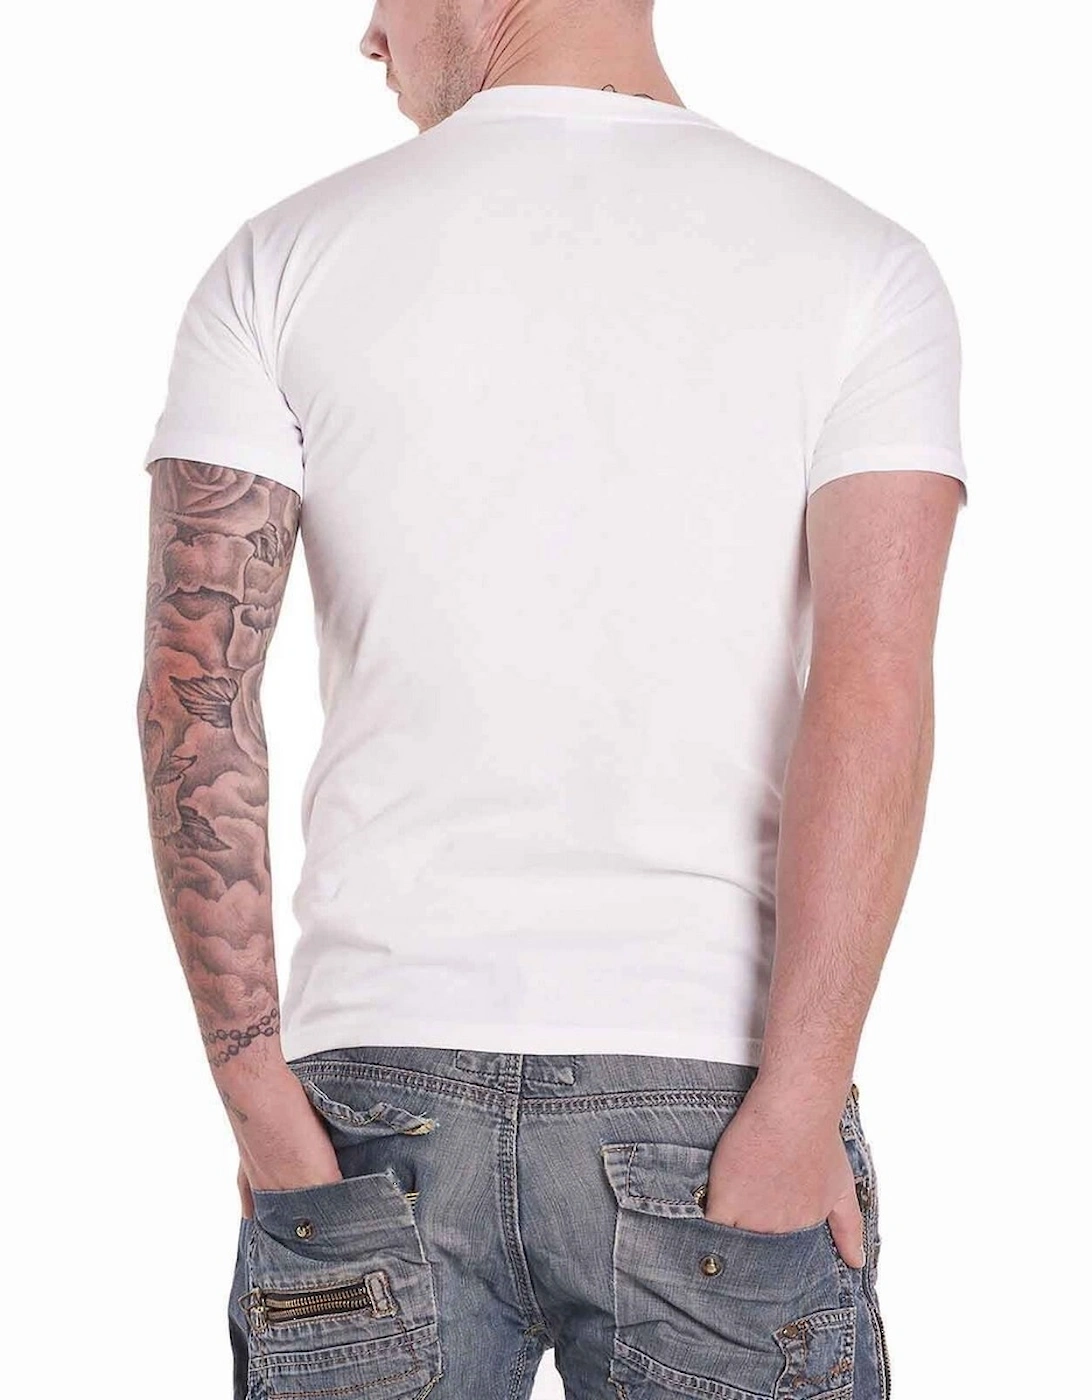 Unisex Adult Warhead T-Shirt